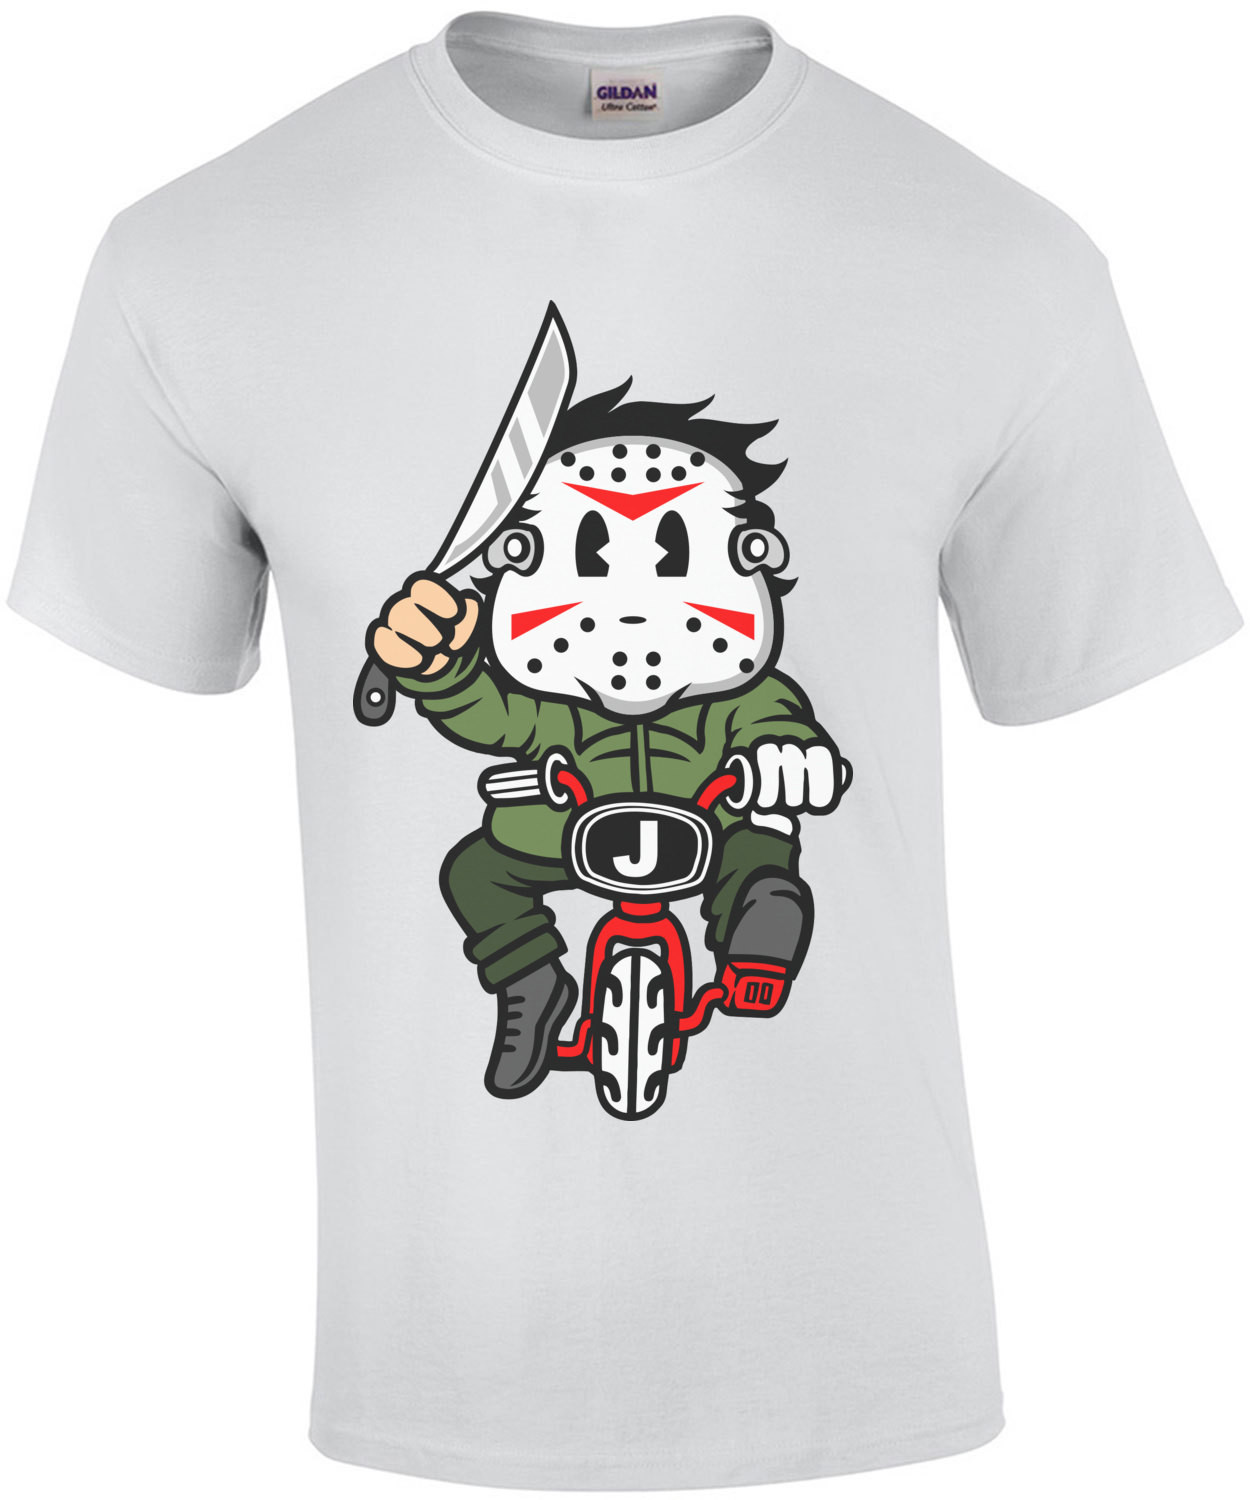 Jason On A Bicycle Retro Cartoon T-Shirt